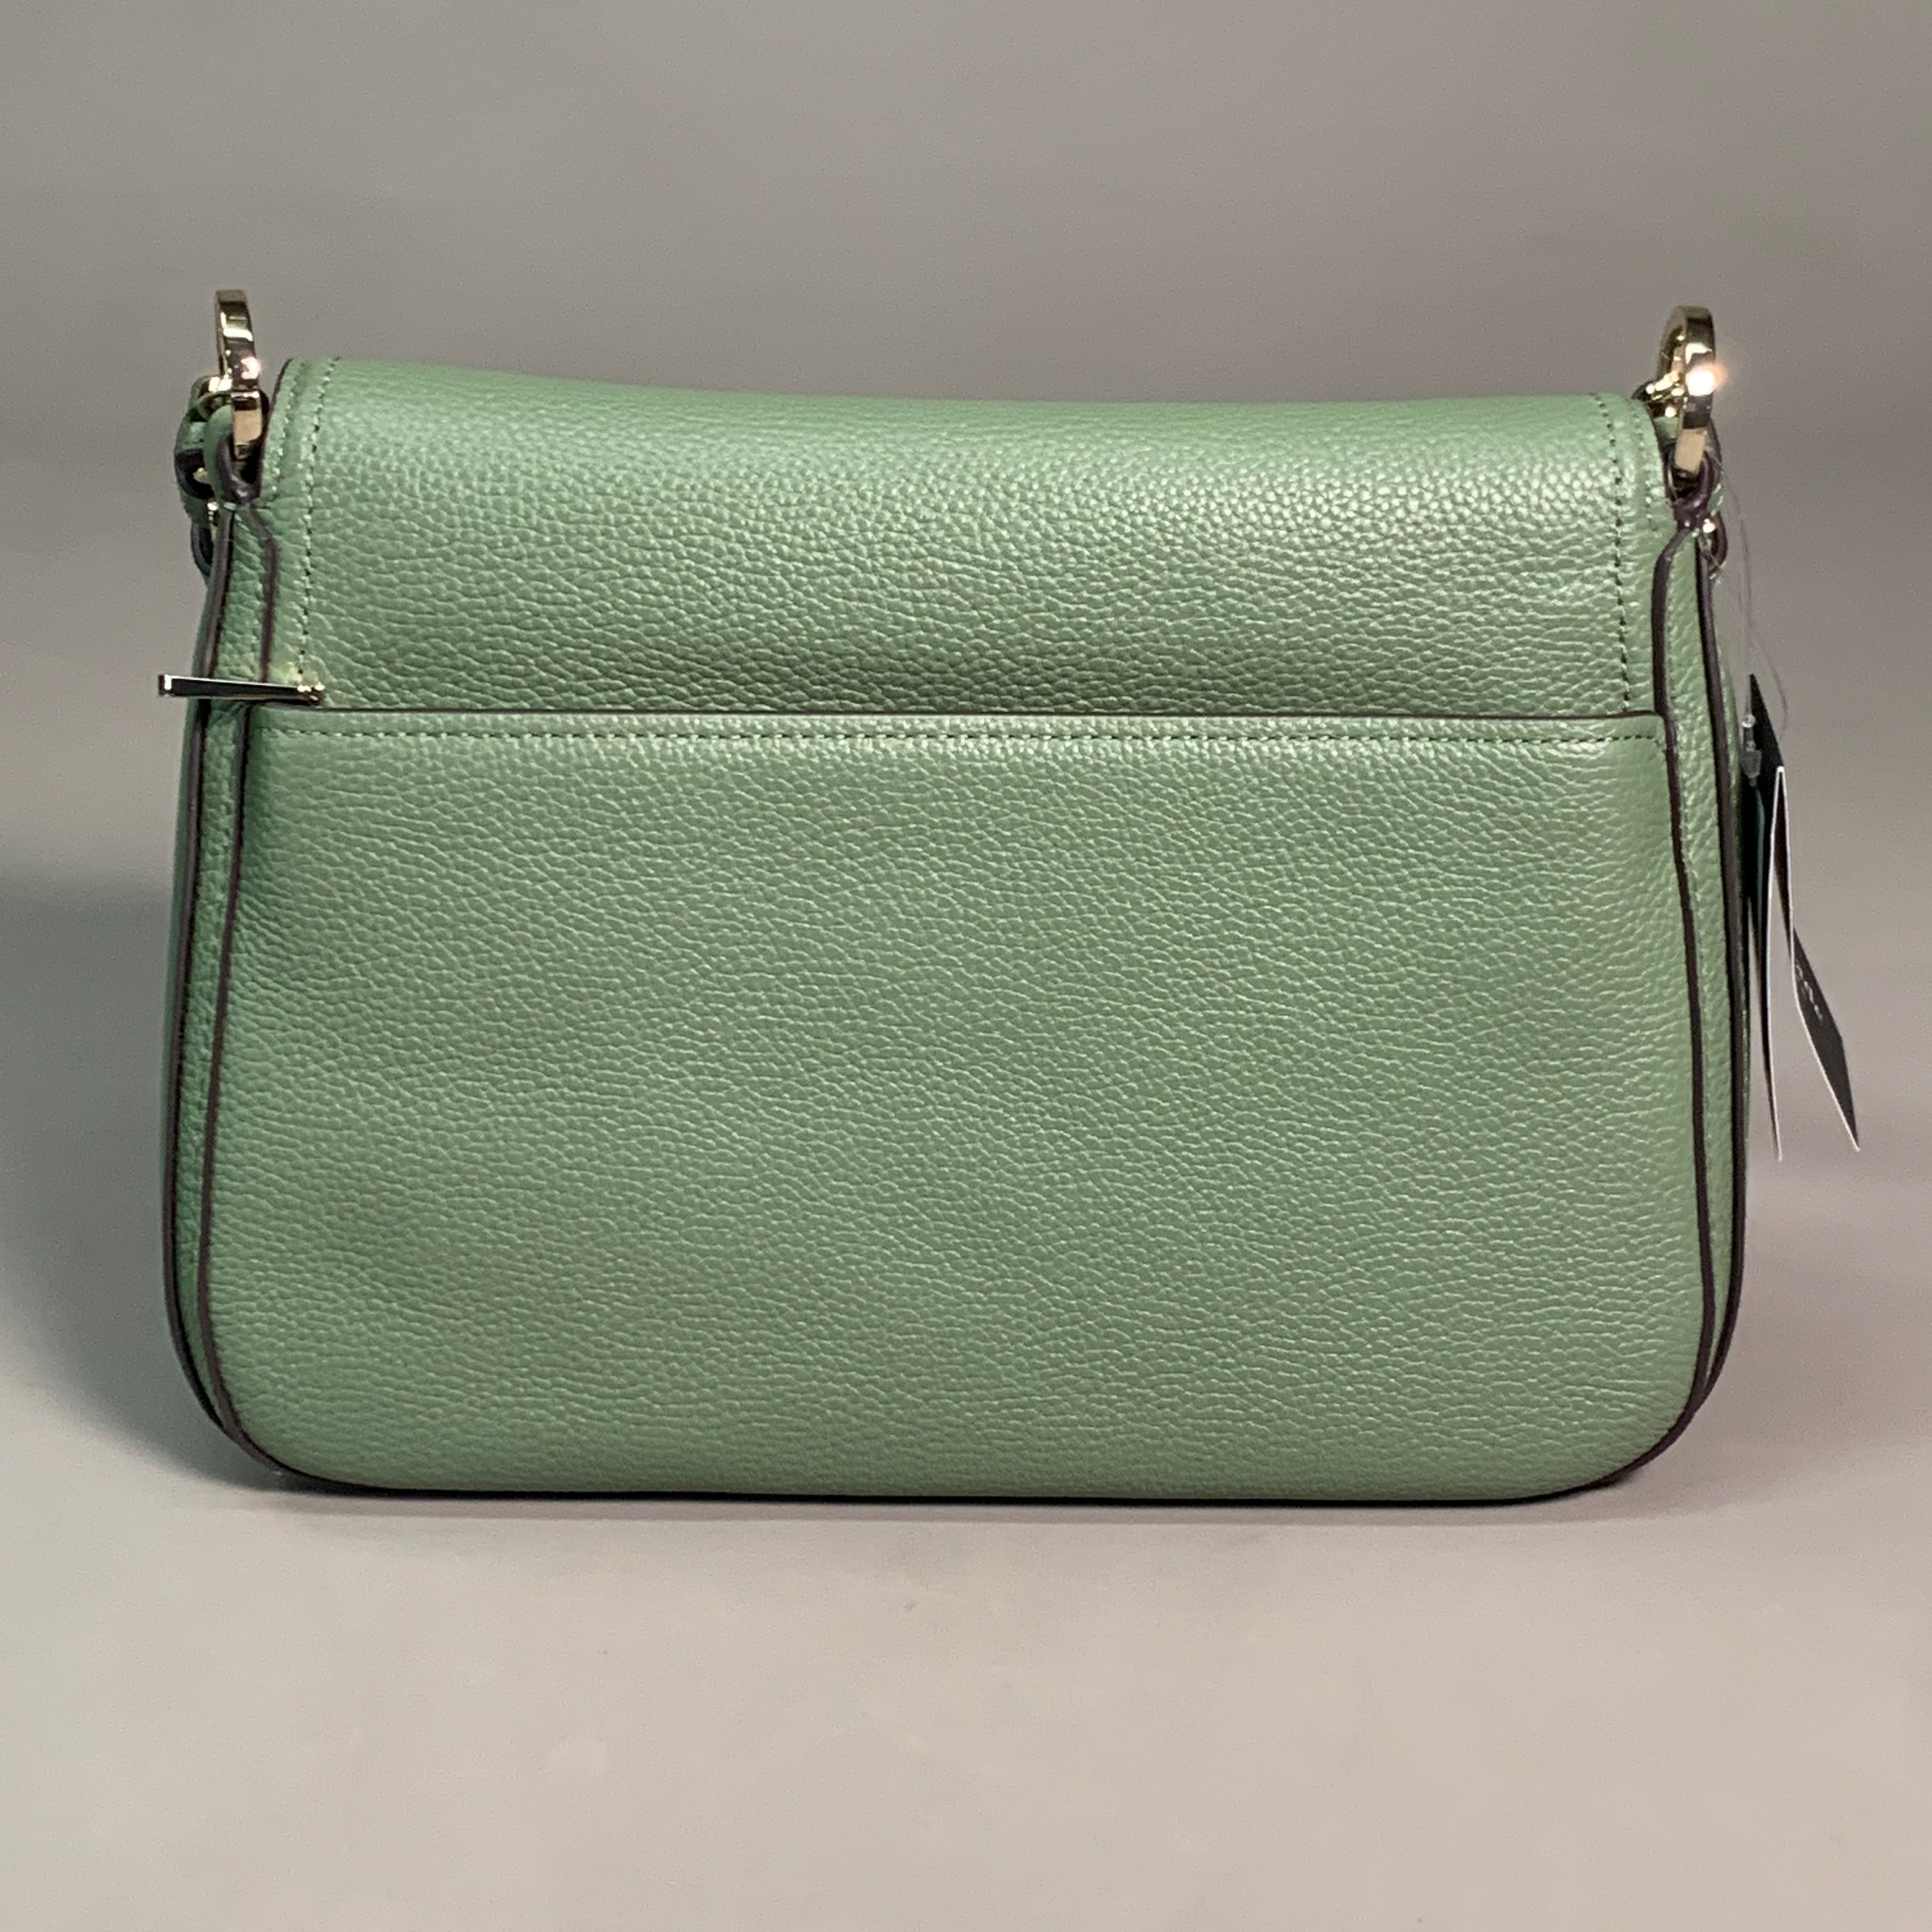 Kate Spade New York Reese Bag: Handbags: Amazon.com